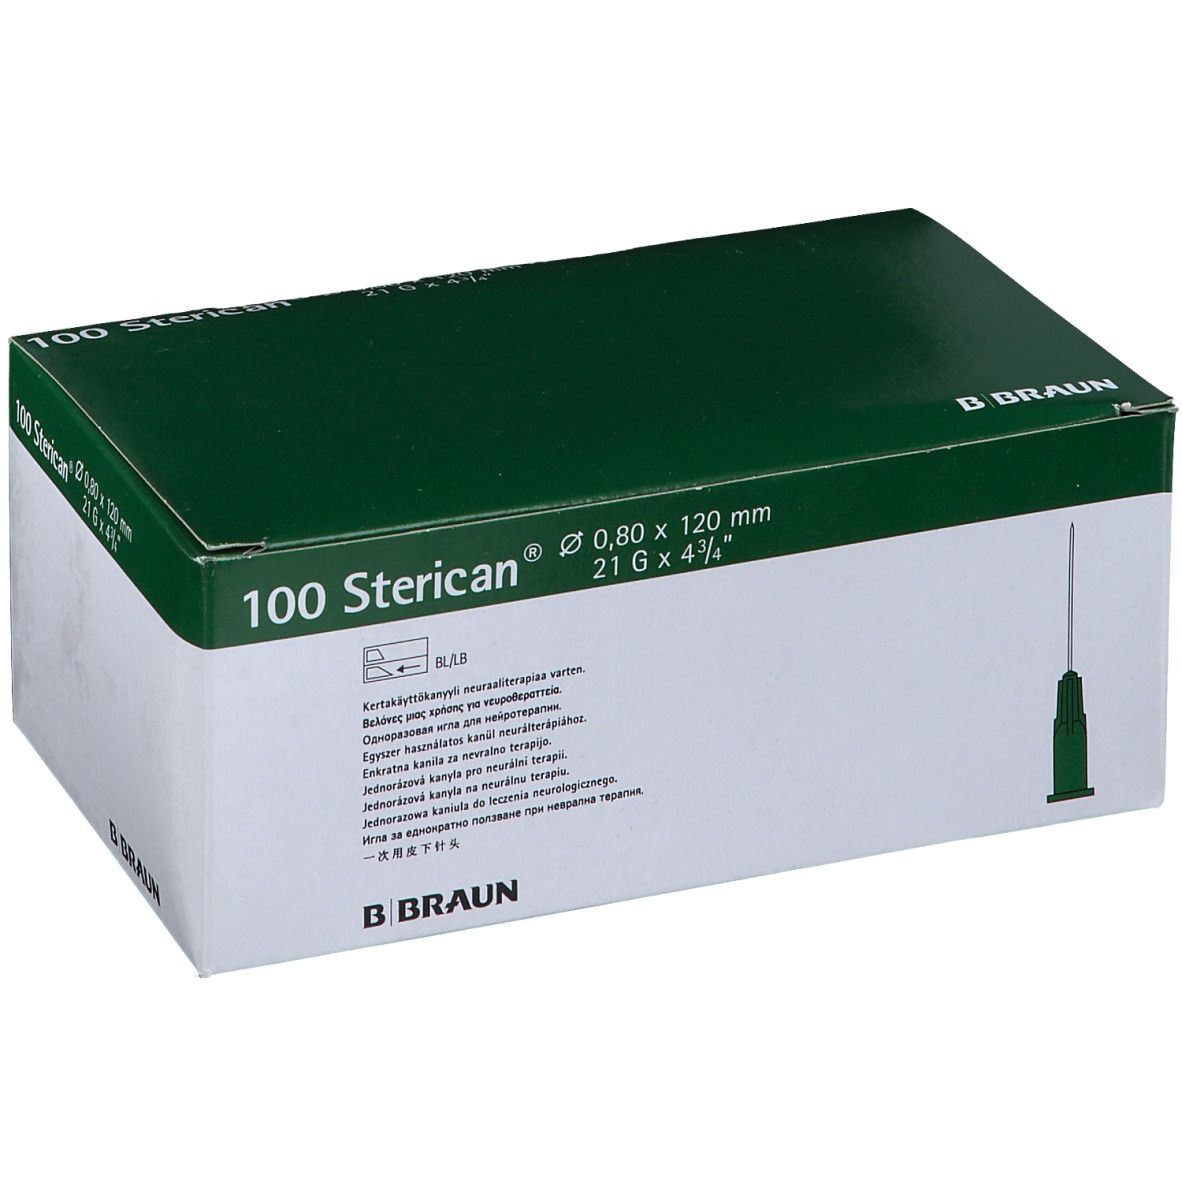 Sterican® zur Neuraltherapie G 21 4 3/4 0,80 x 120 mm